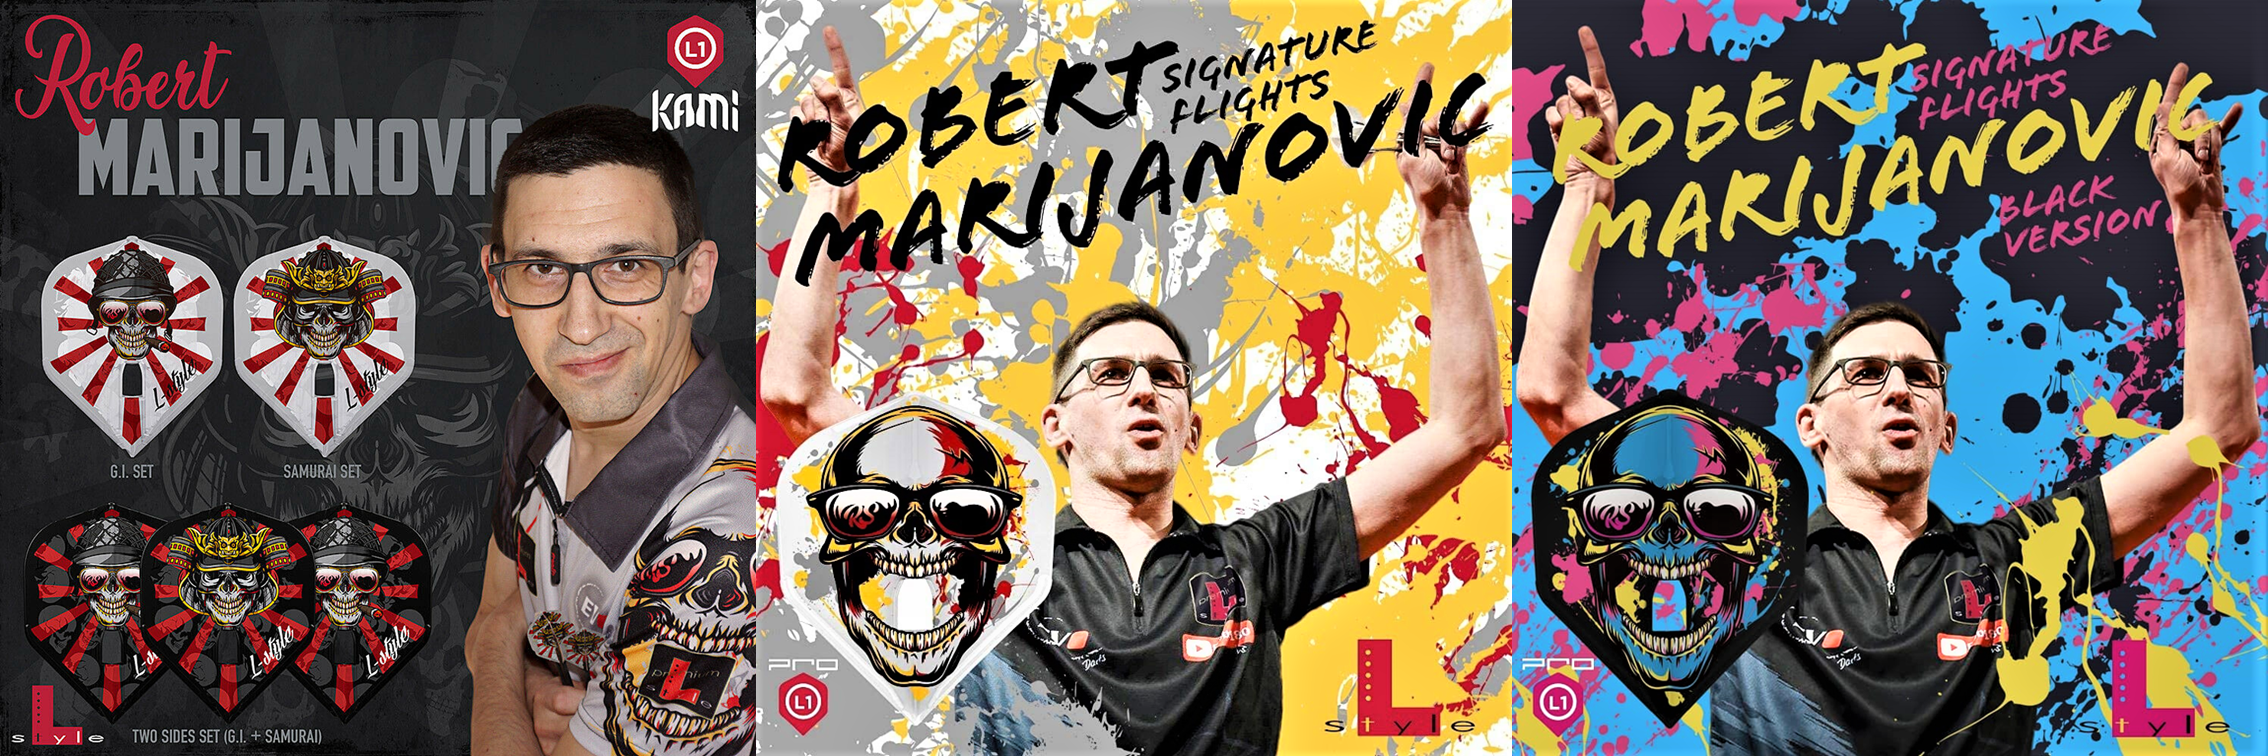 Robert-Marijanovic-Banner